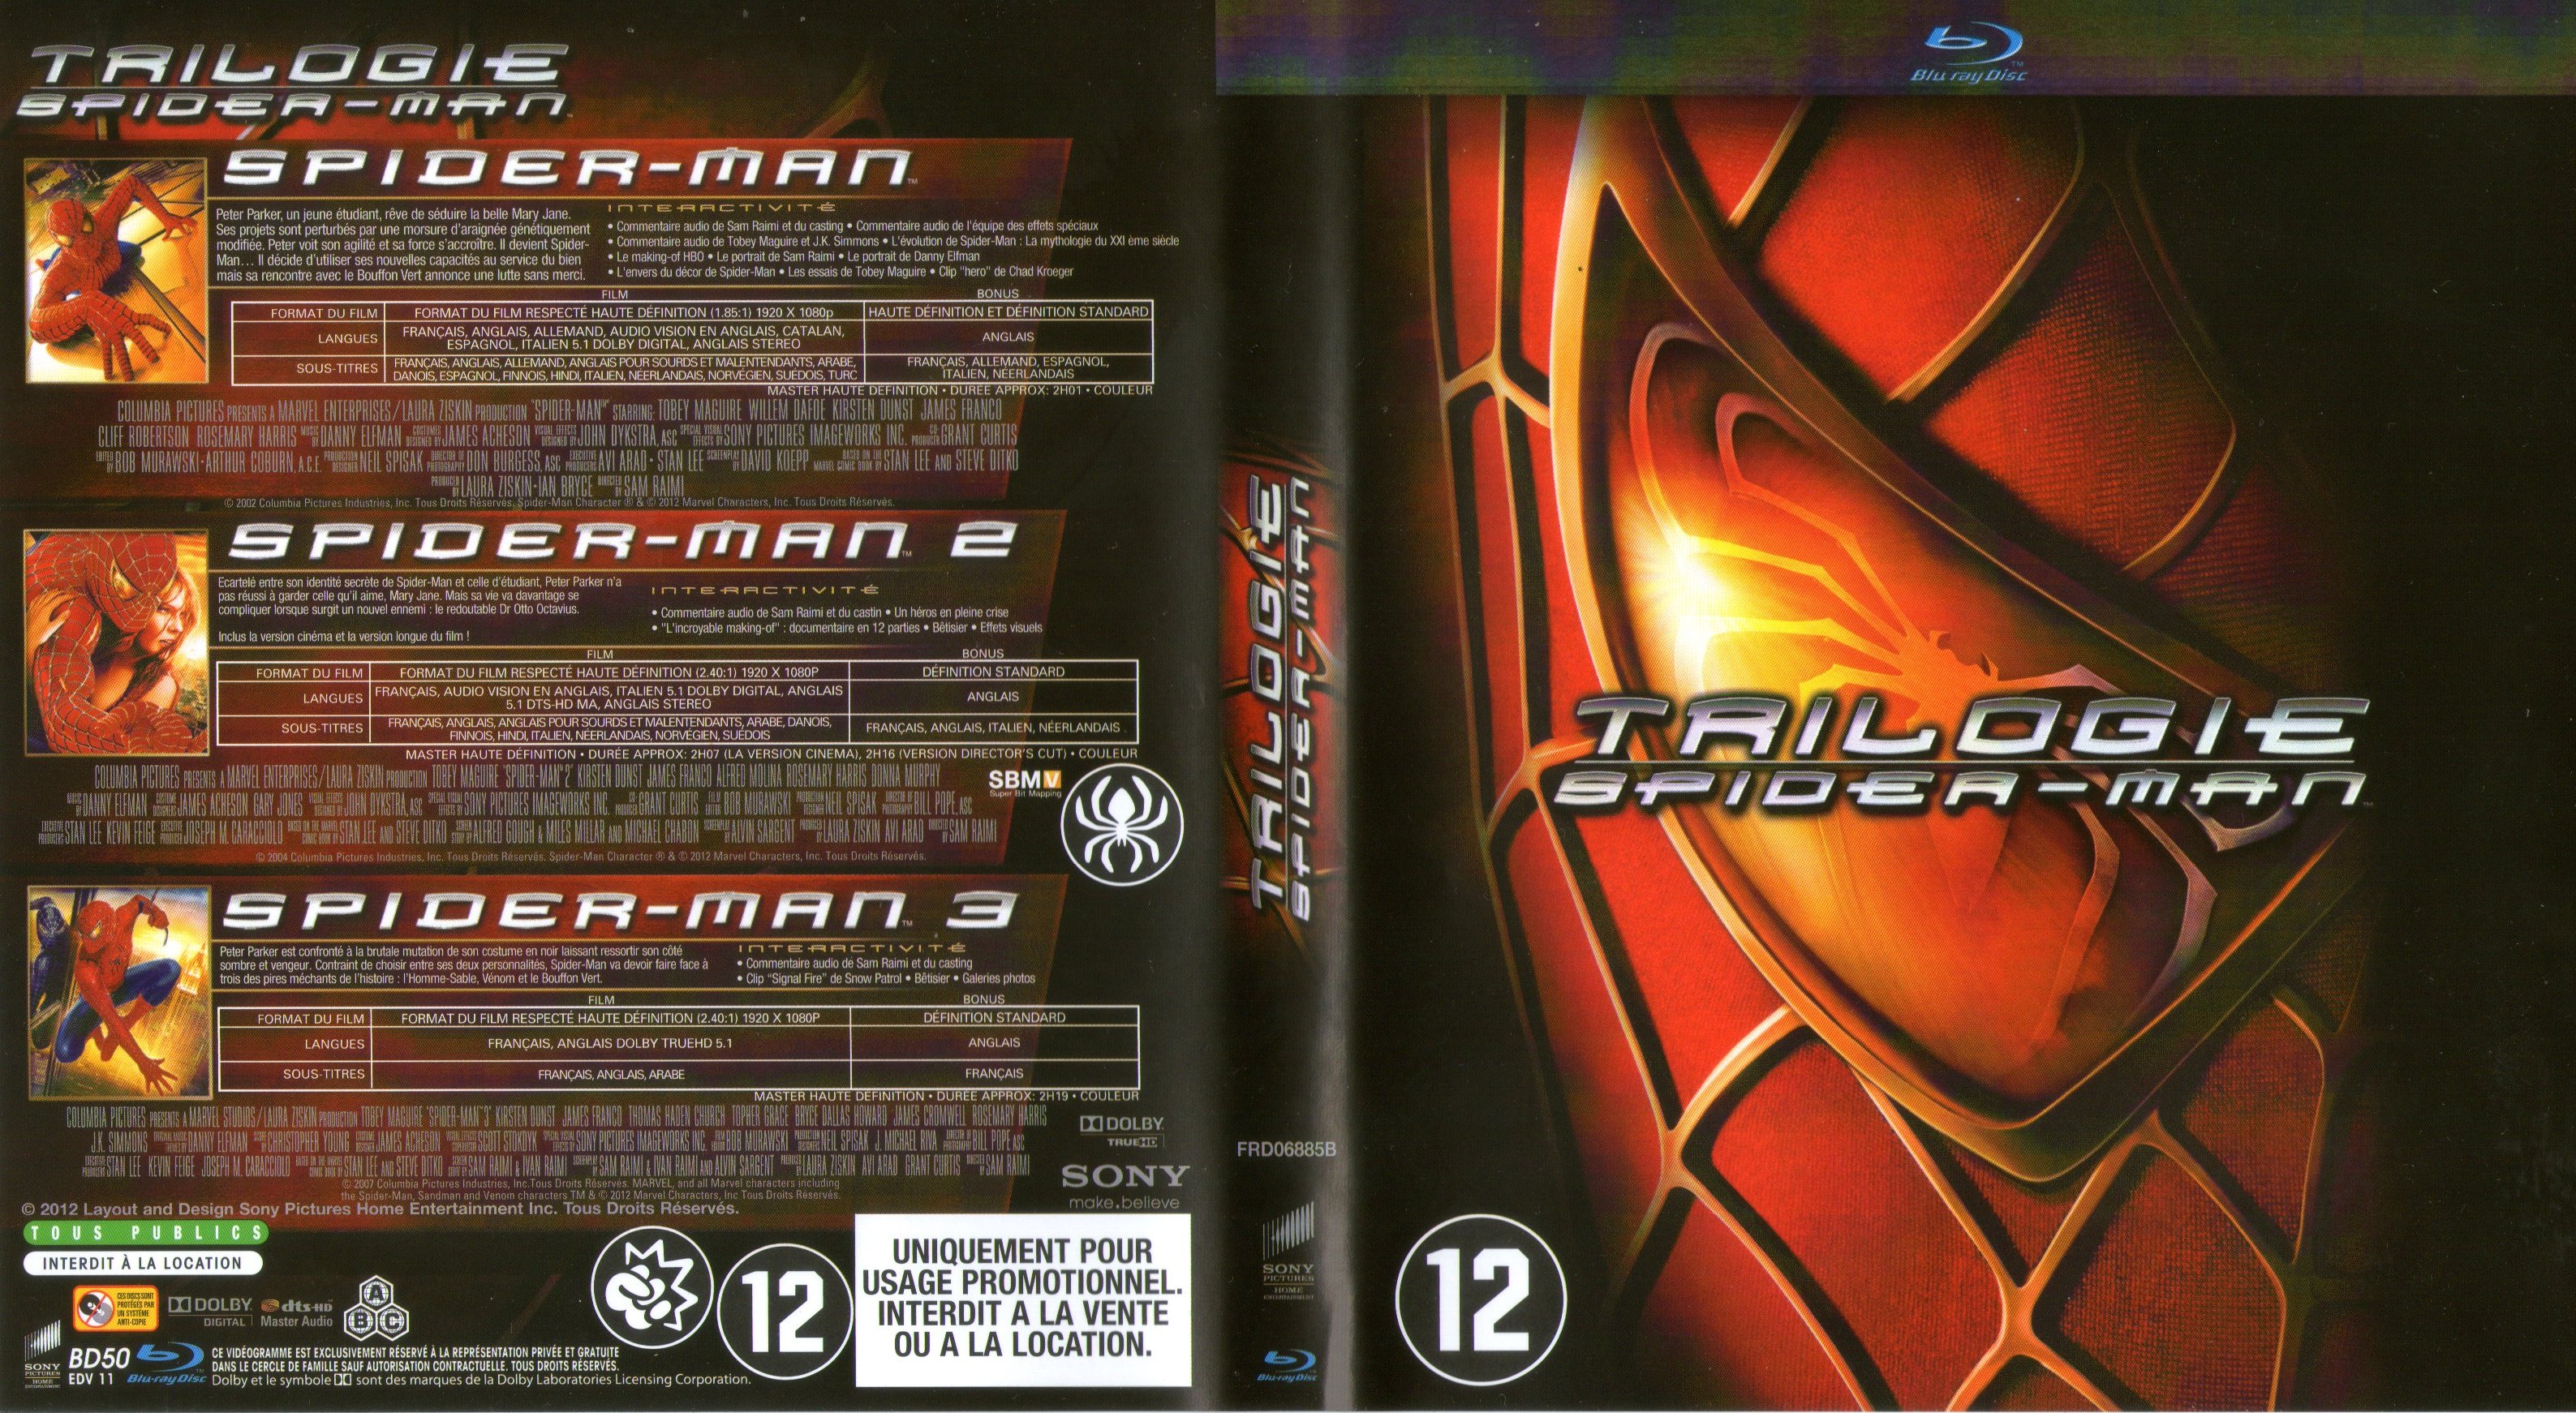 Jaquette DVD Spiderman Trilogie (BLU-RAY) v2